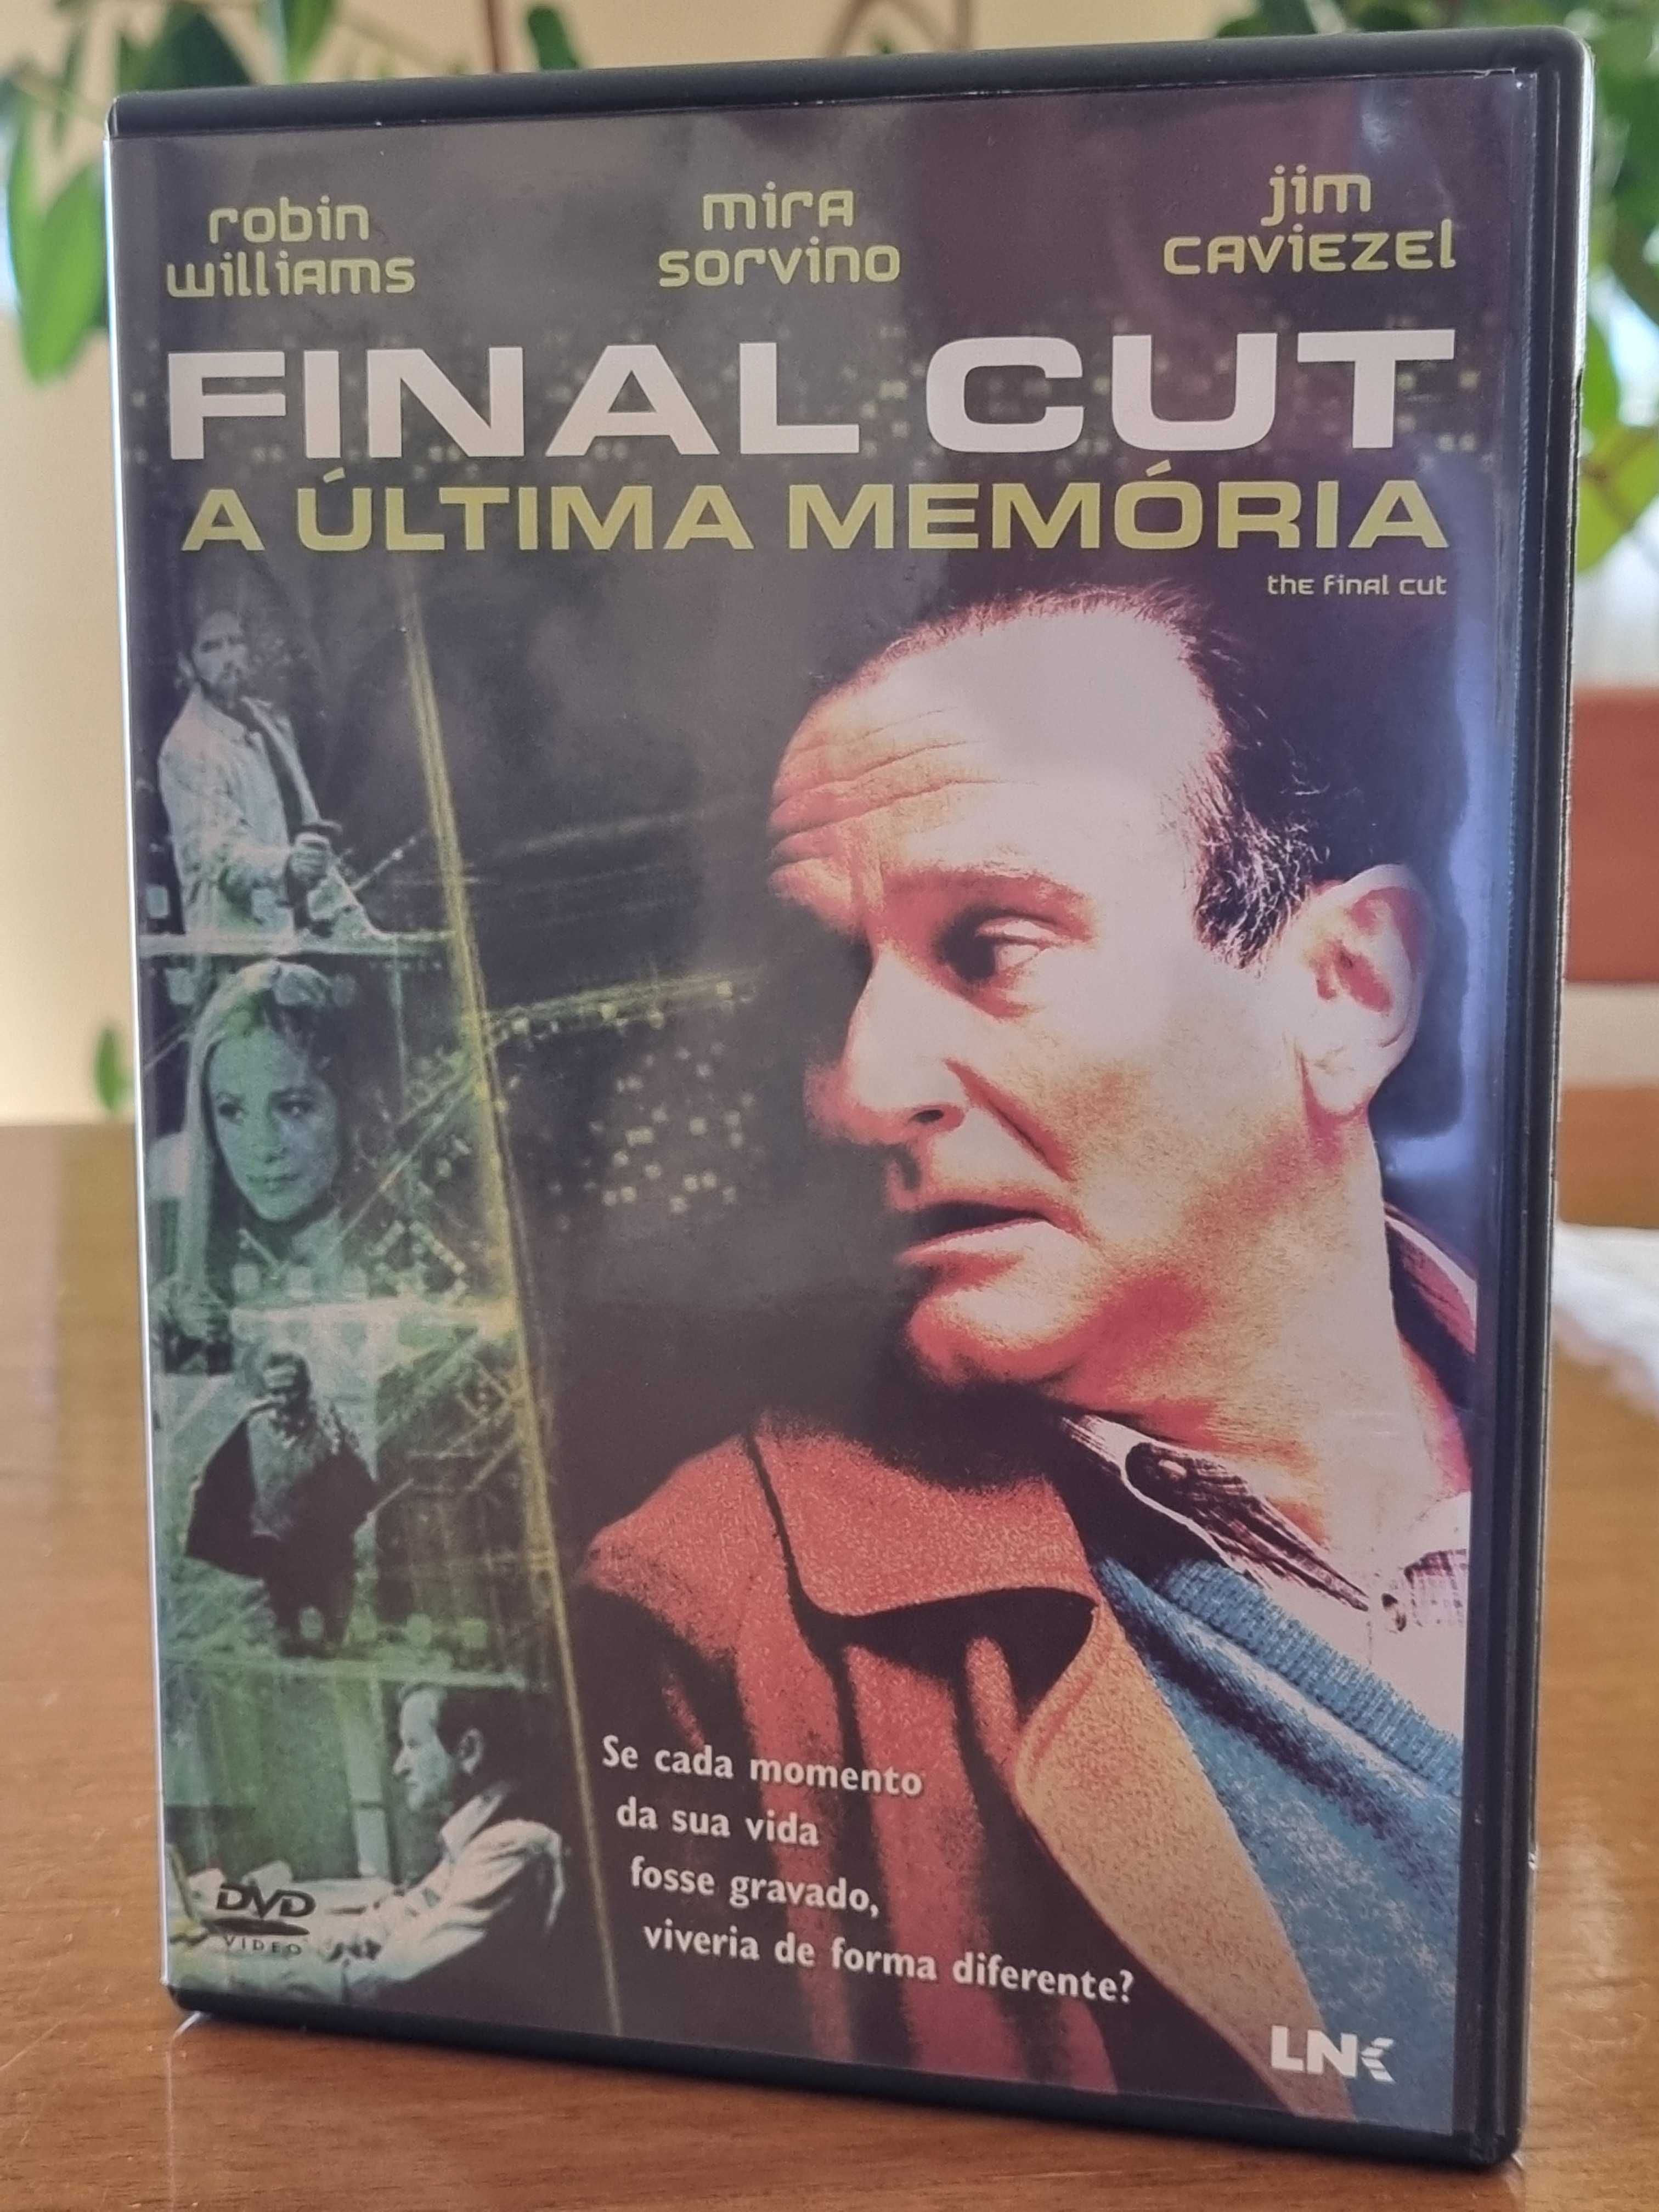 Vendo DVD Filme FINAL CUT - "Última Memória" (c/ Robin Williams, 2004)